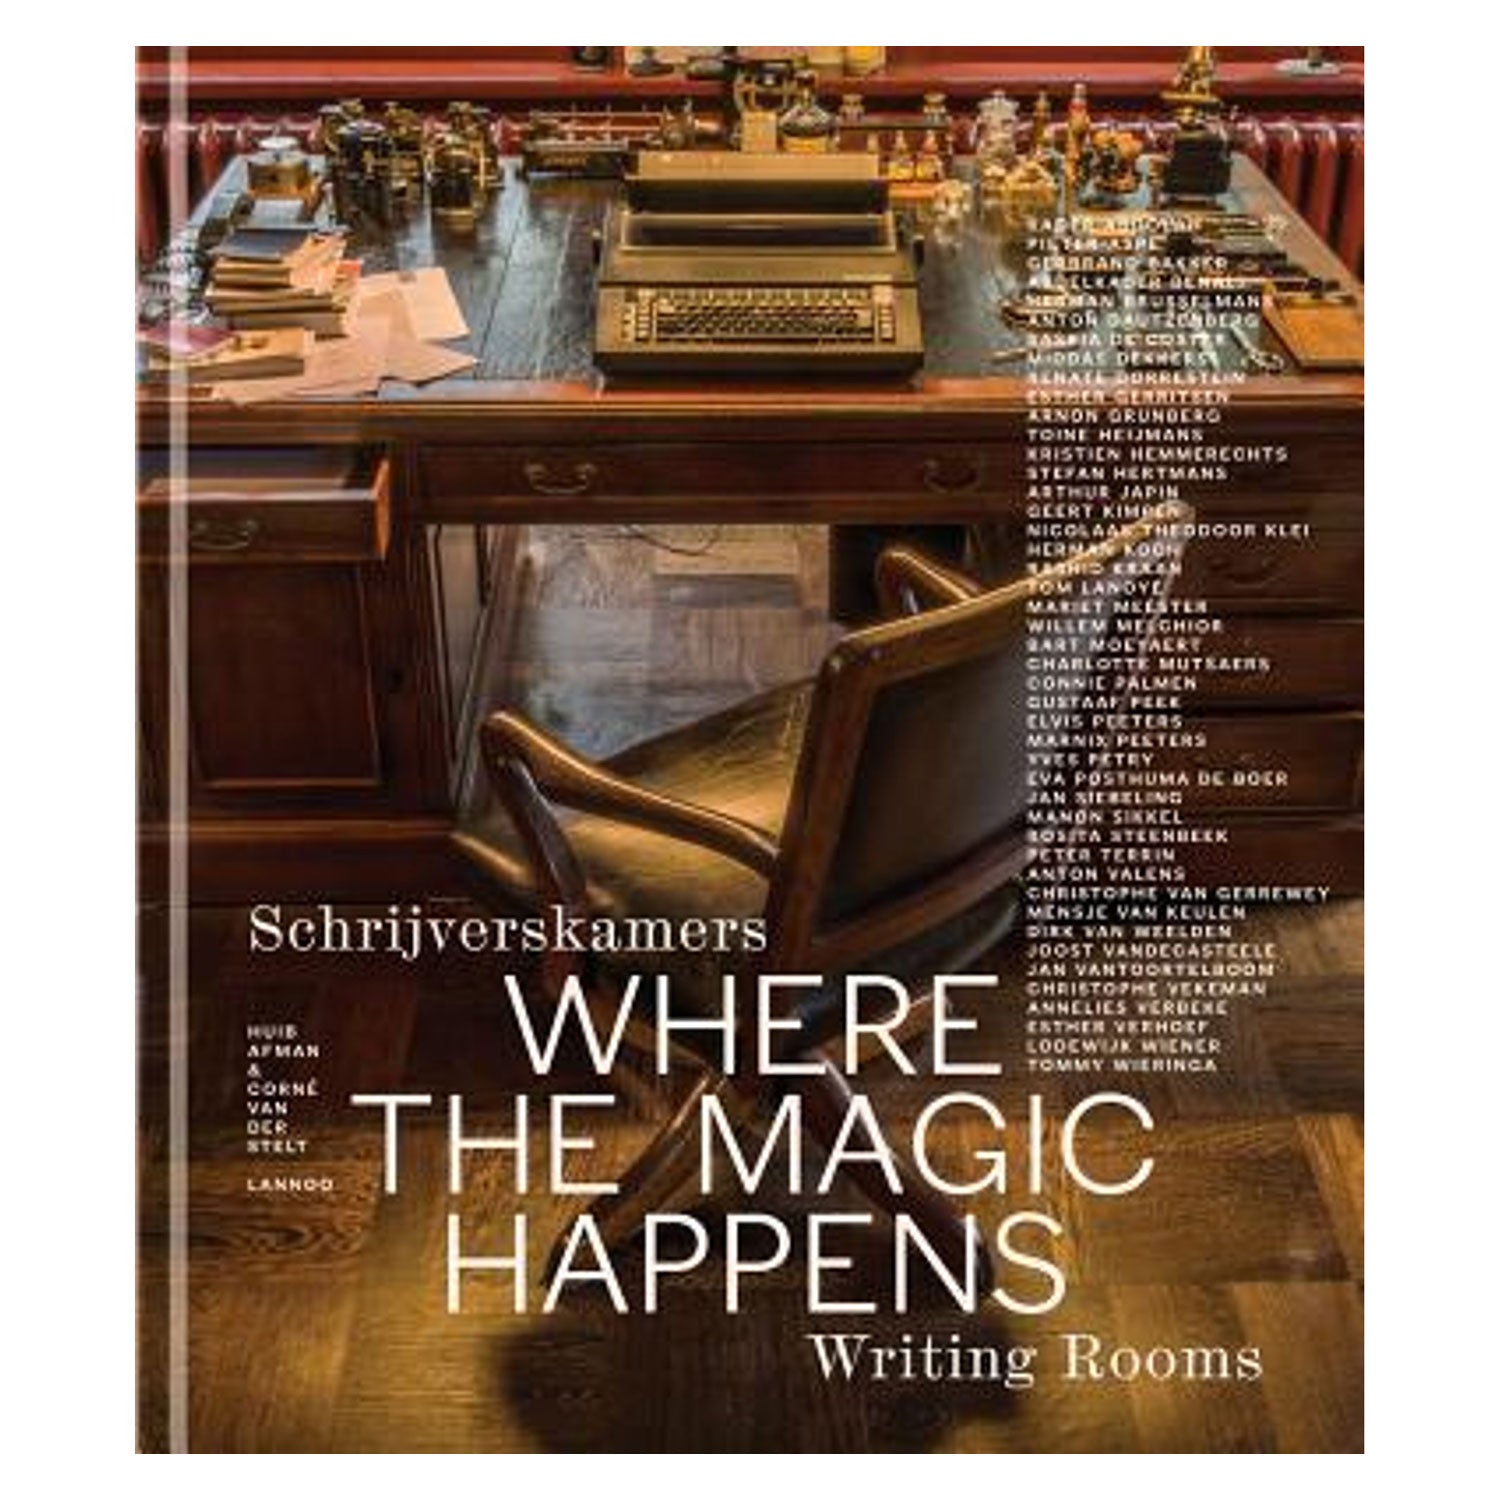 Where the Magic Happens: Writer's Rooms by Huib Afman Photo Museum Ireland